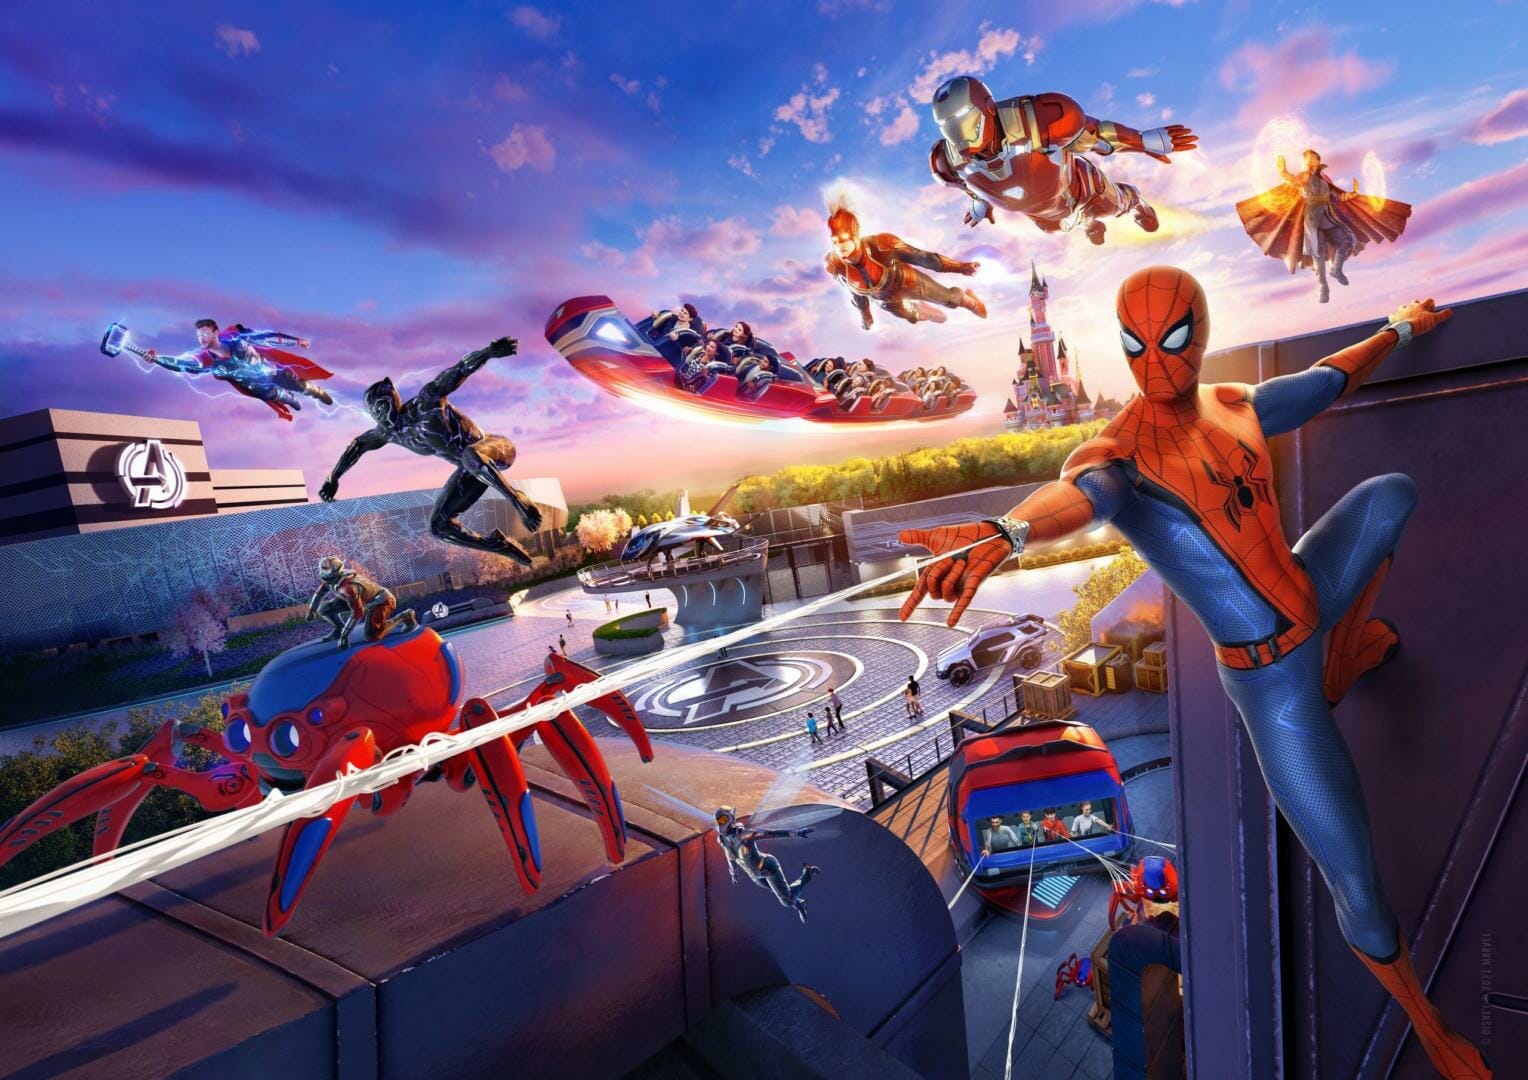 Disneyland Paris: Avengers Campus Opening Soon With More Iron Man